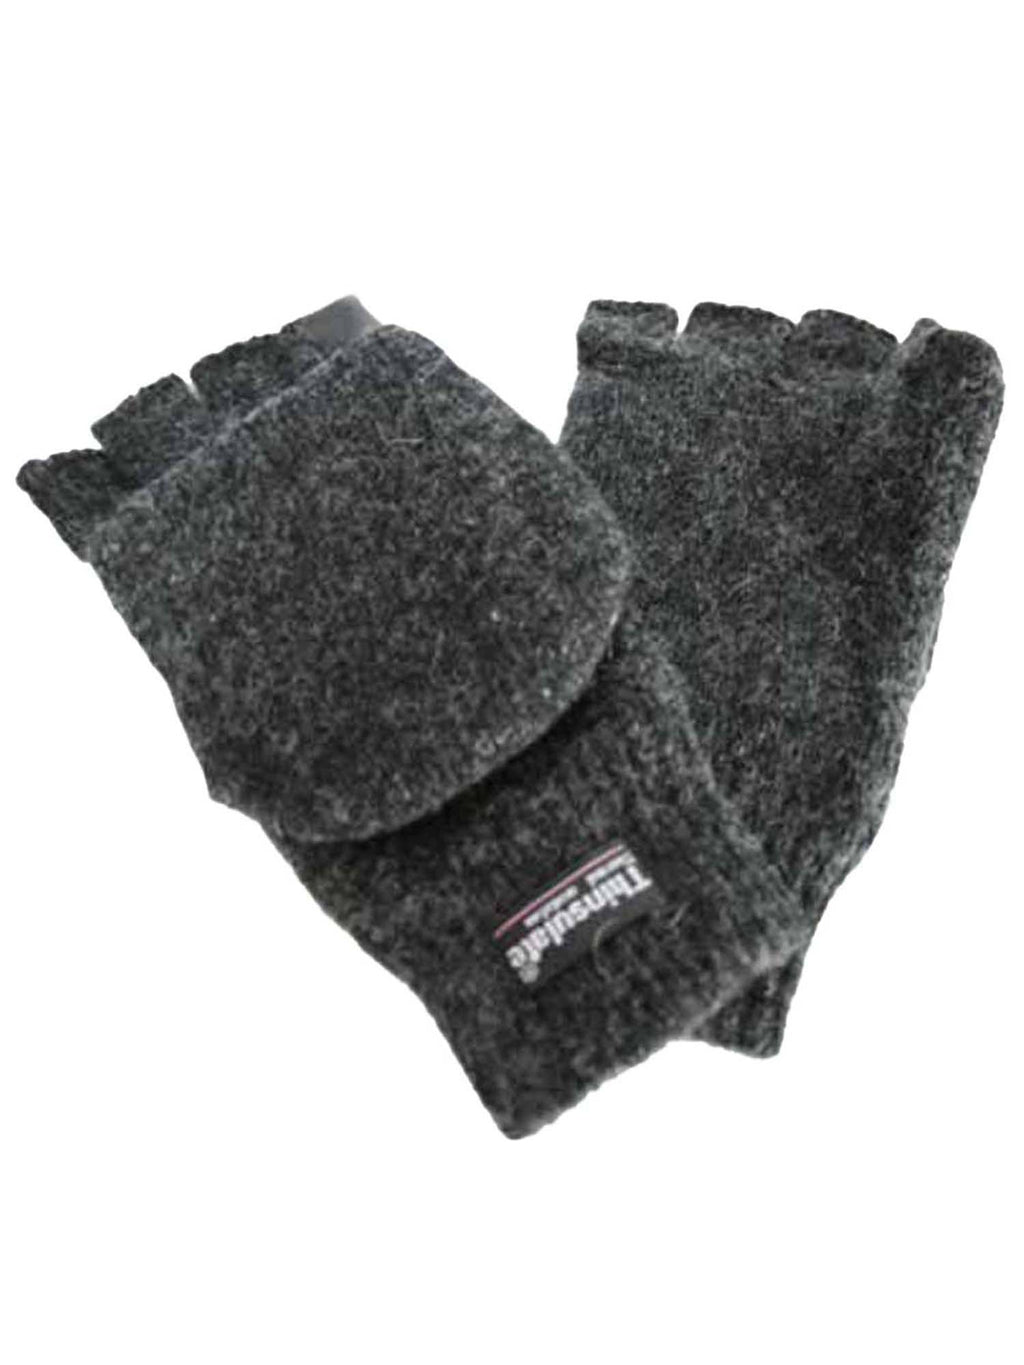 Mens Rag Wool Fingerless Convertible Gloves